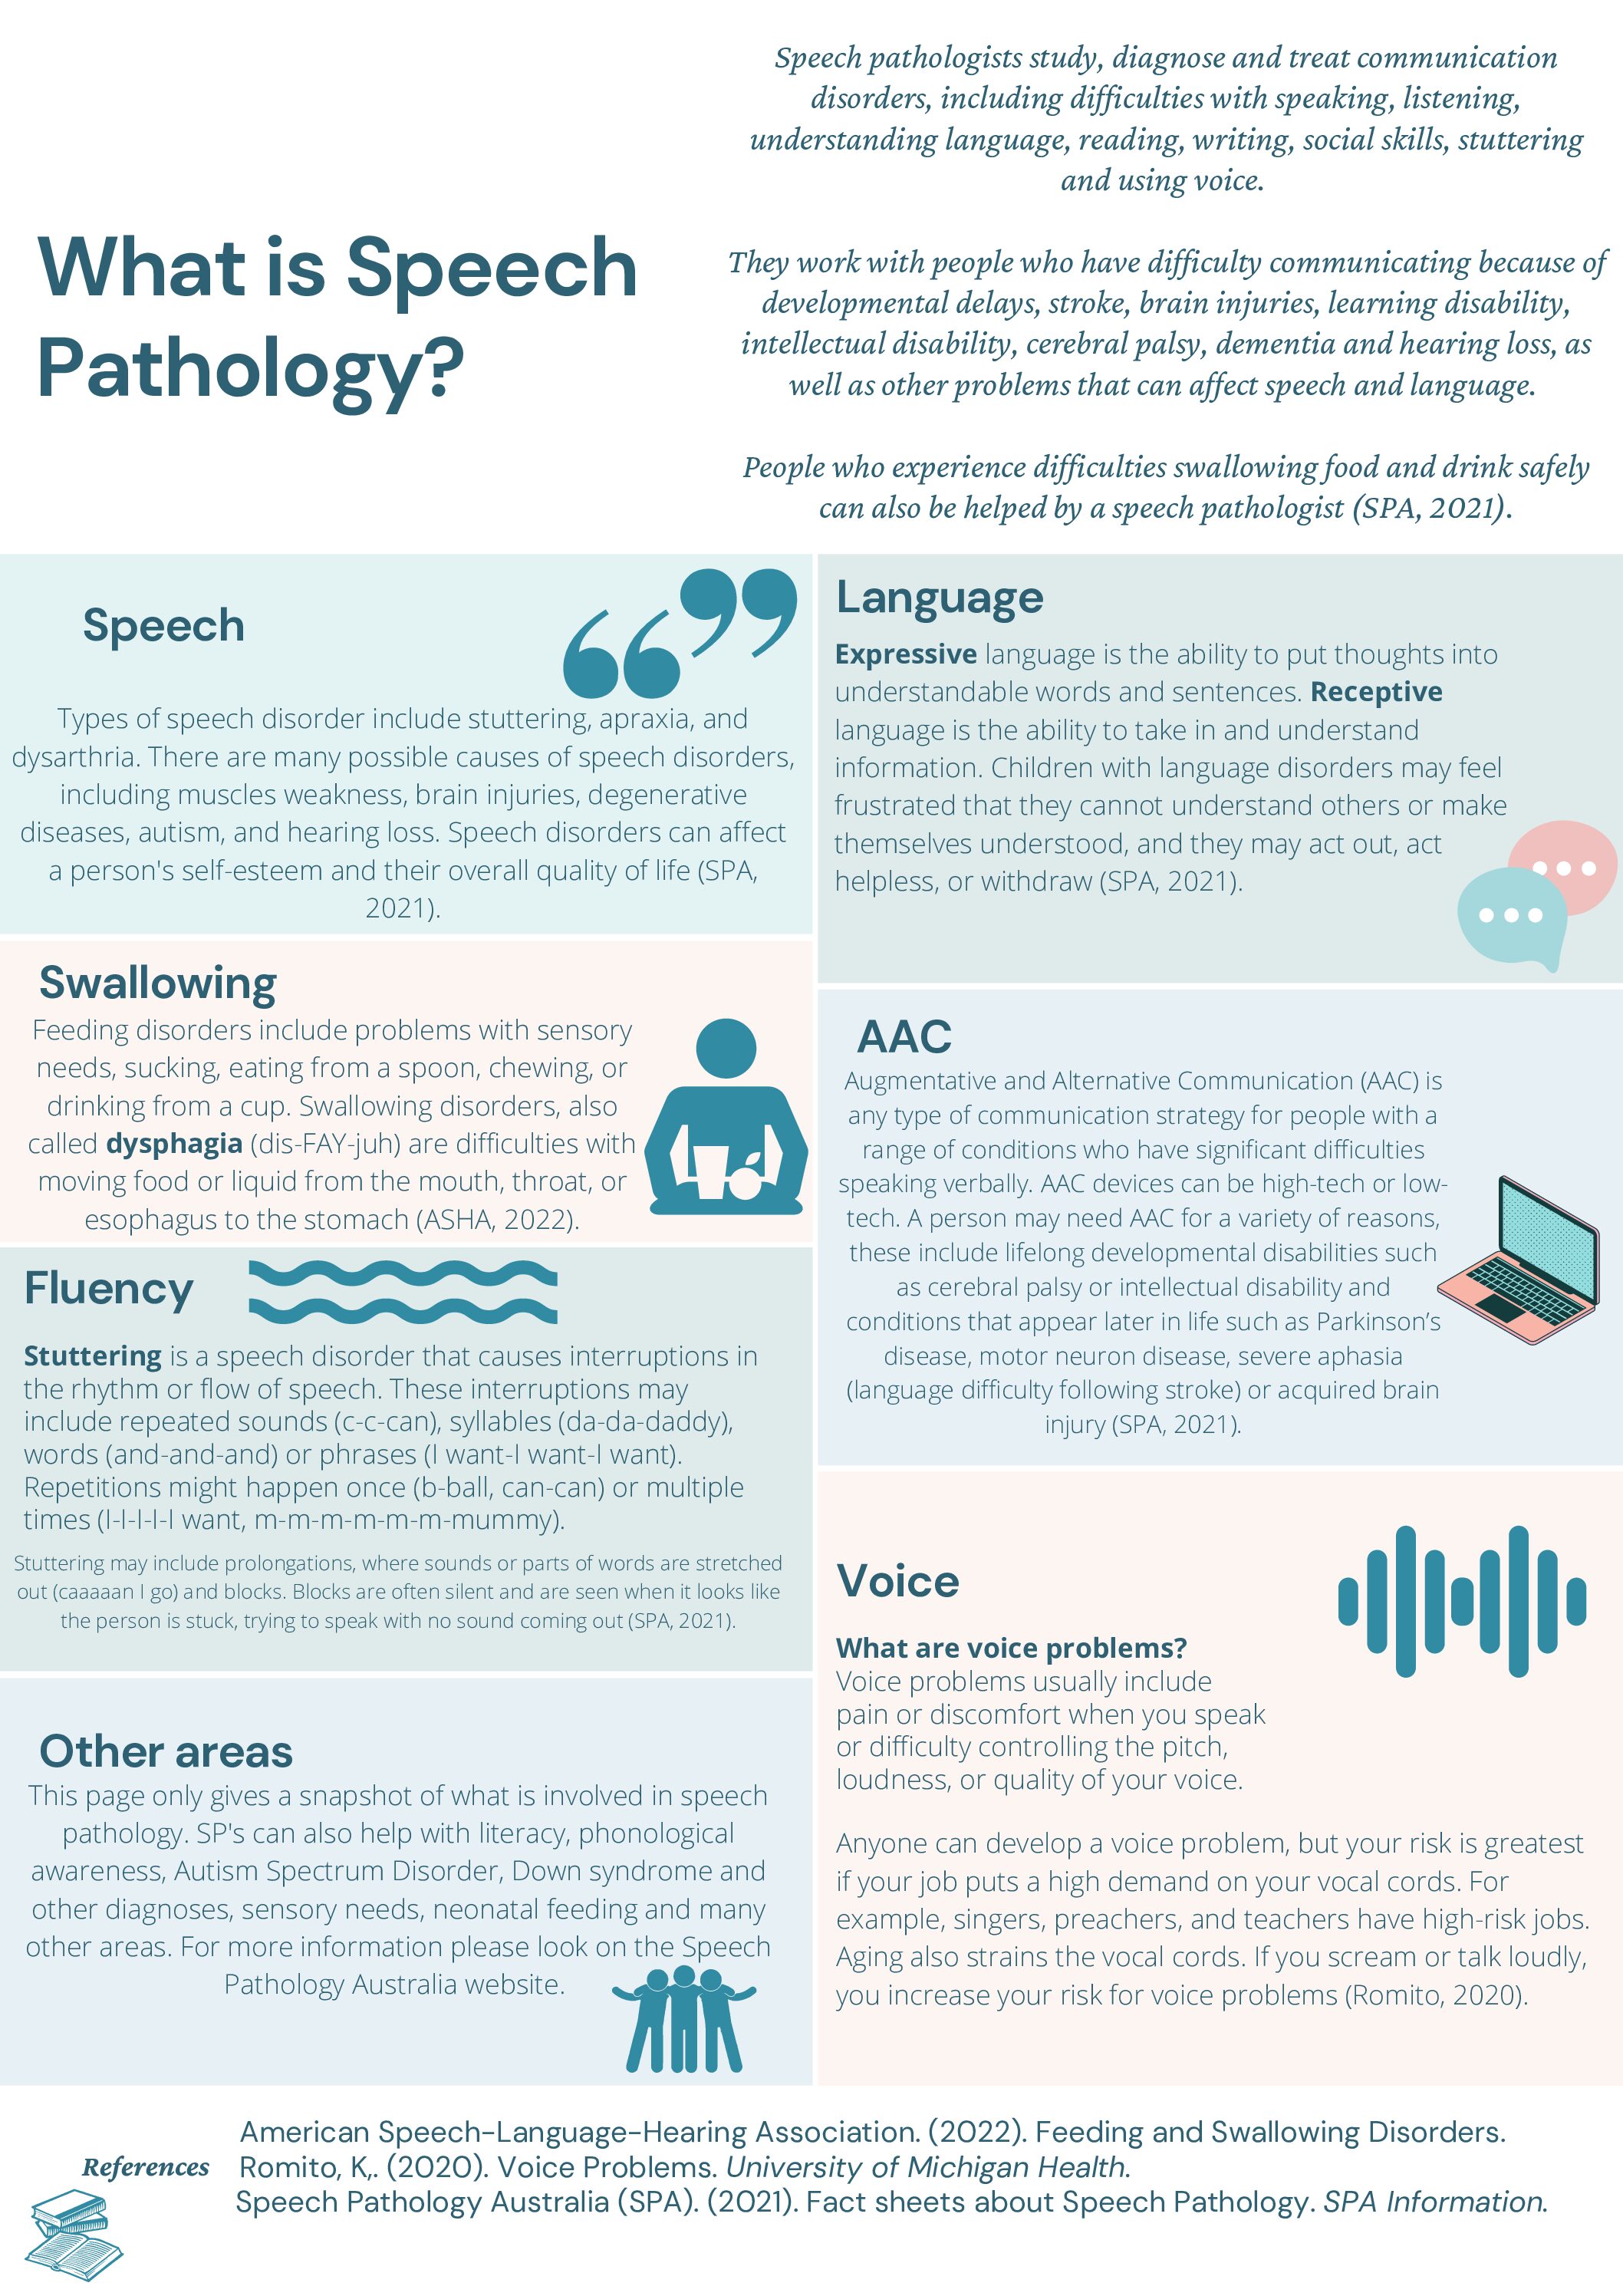 speech language pathology meaning